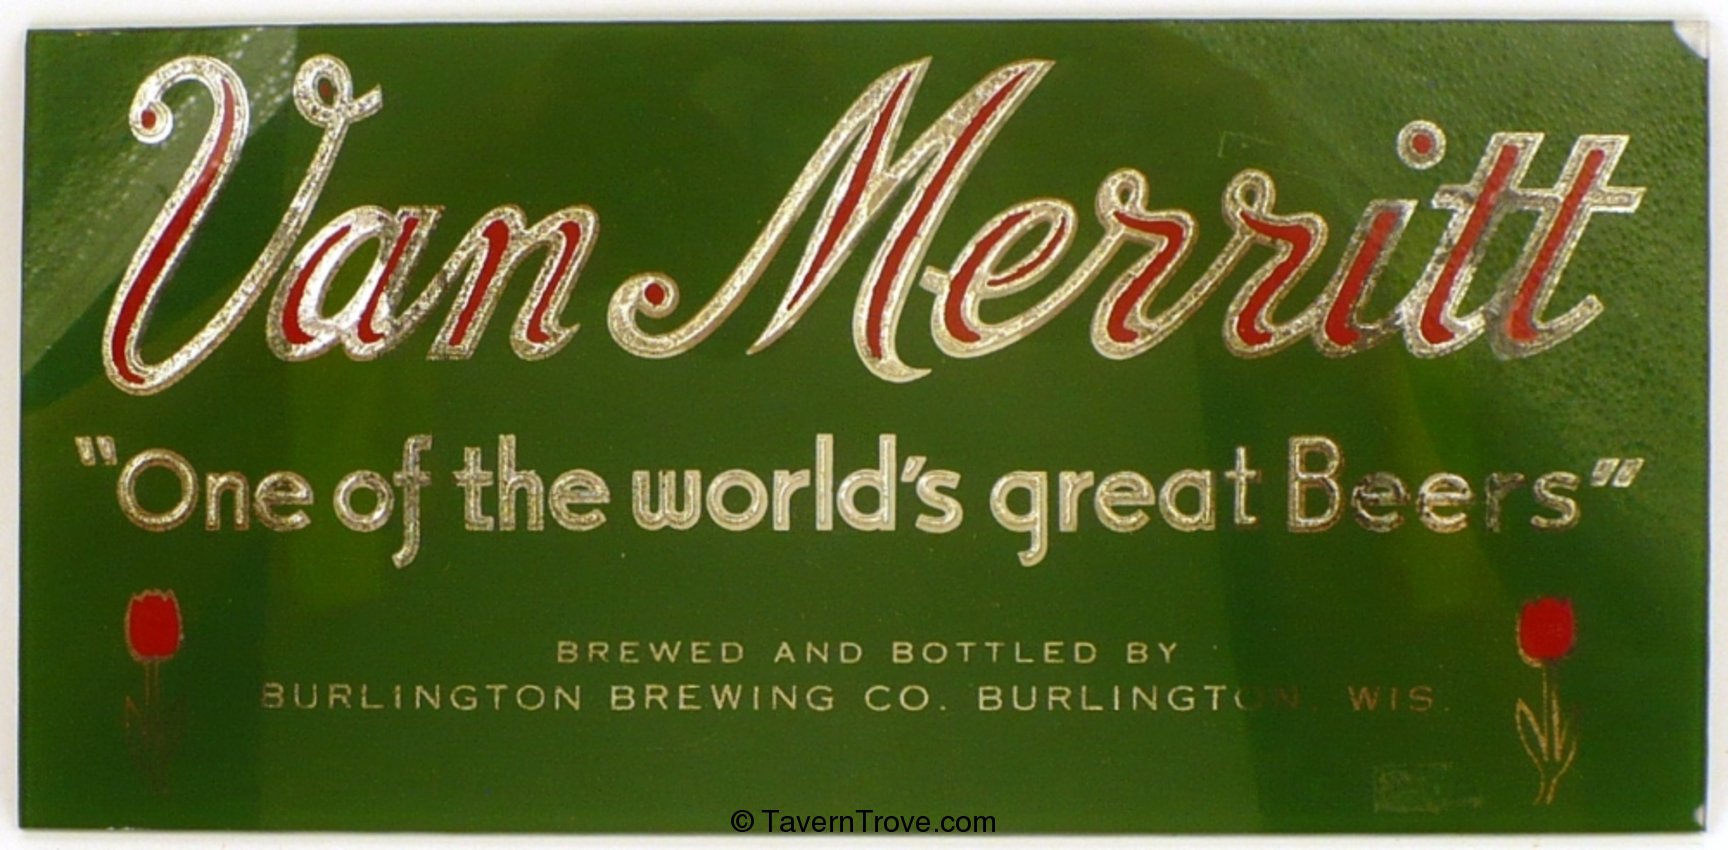 Van Merritt Beer reverse painted glass